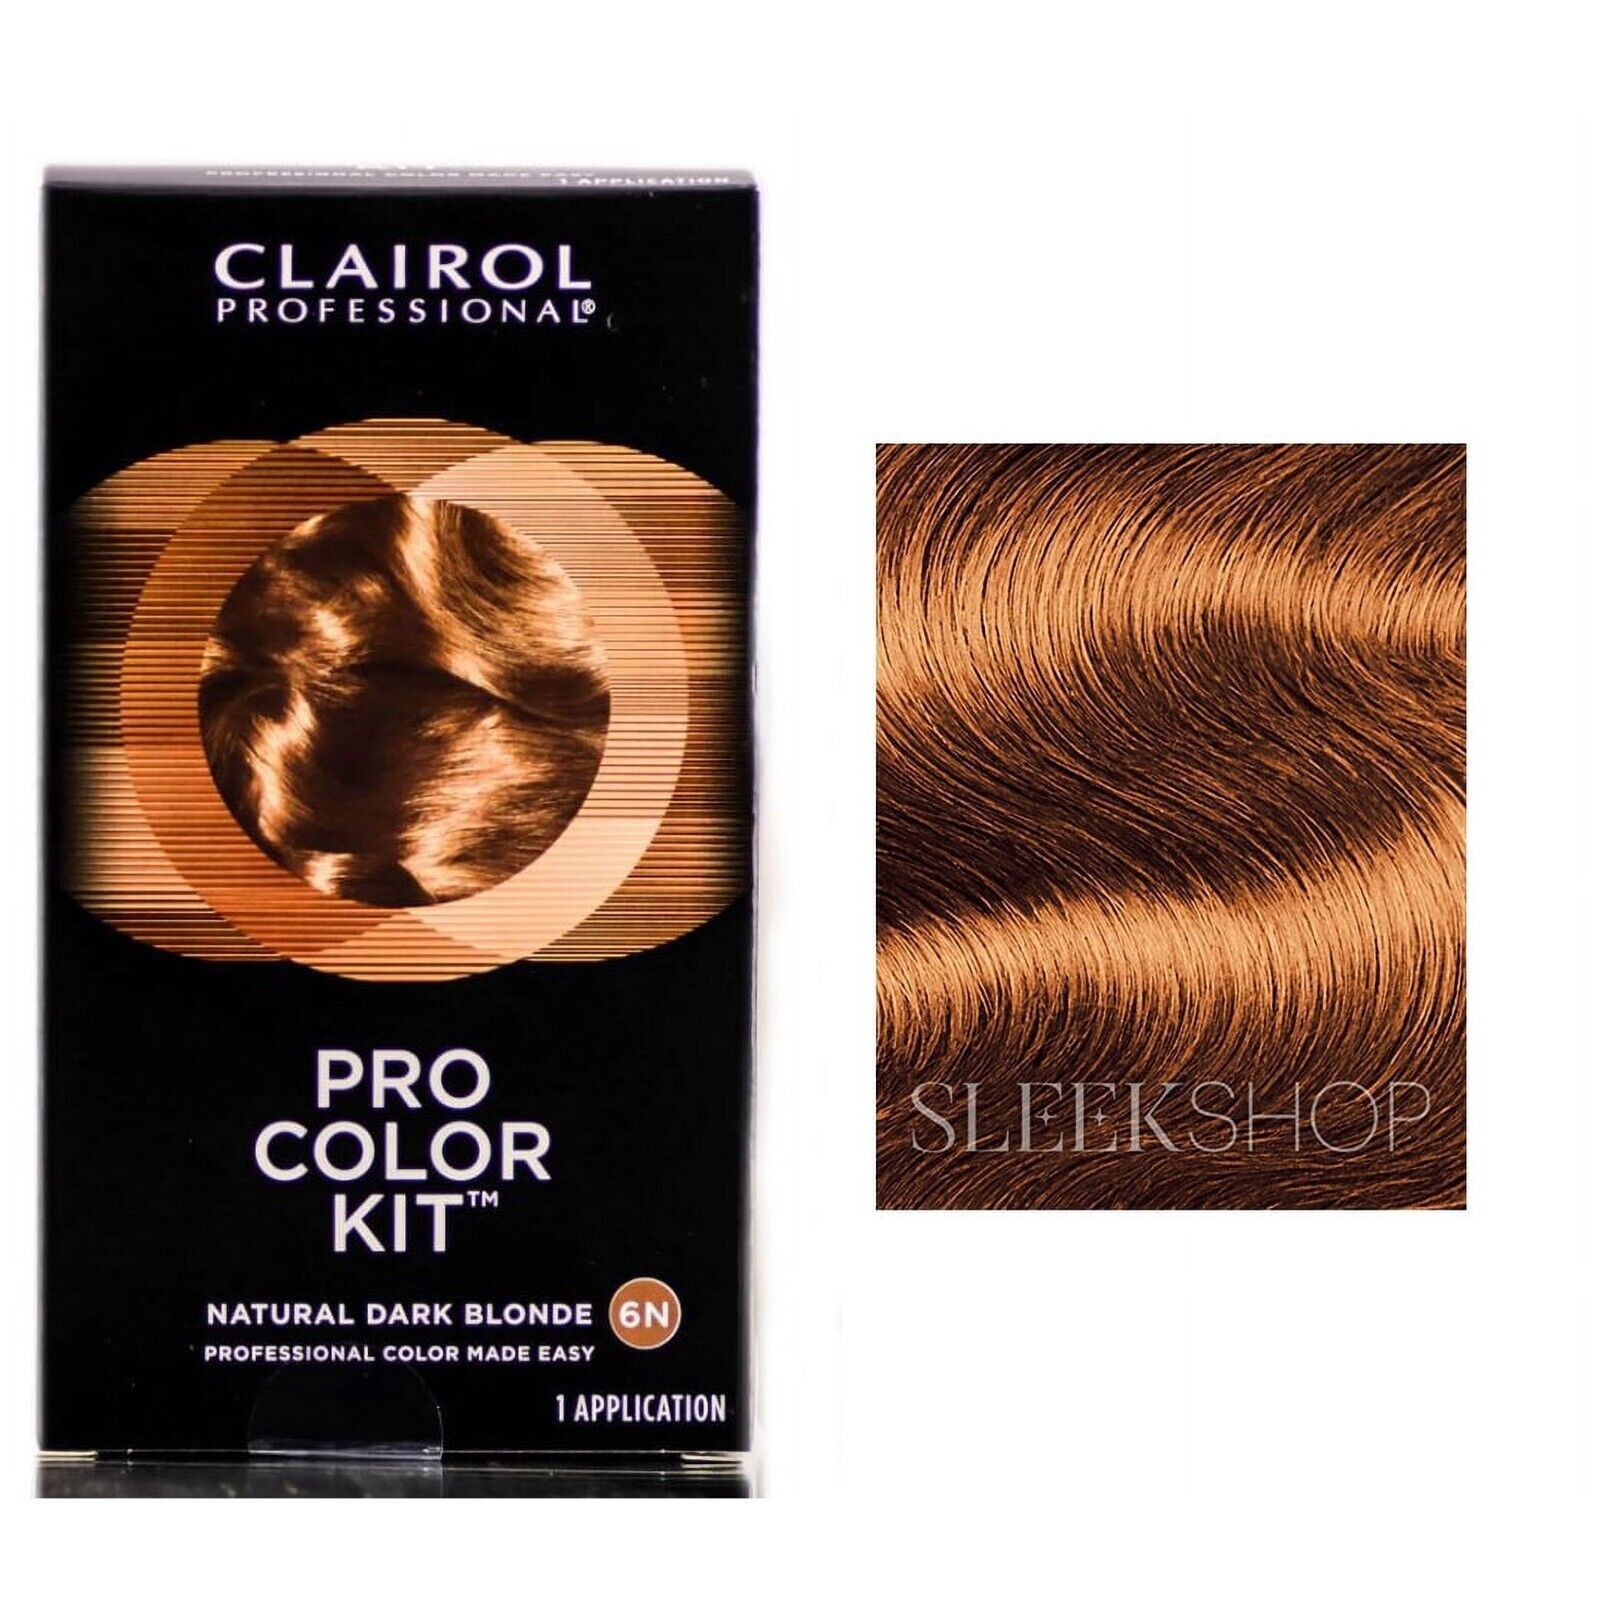 Clairol Professional Pro Color Kit 1 Application - 6N Natural Dark Blonde - $13.98